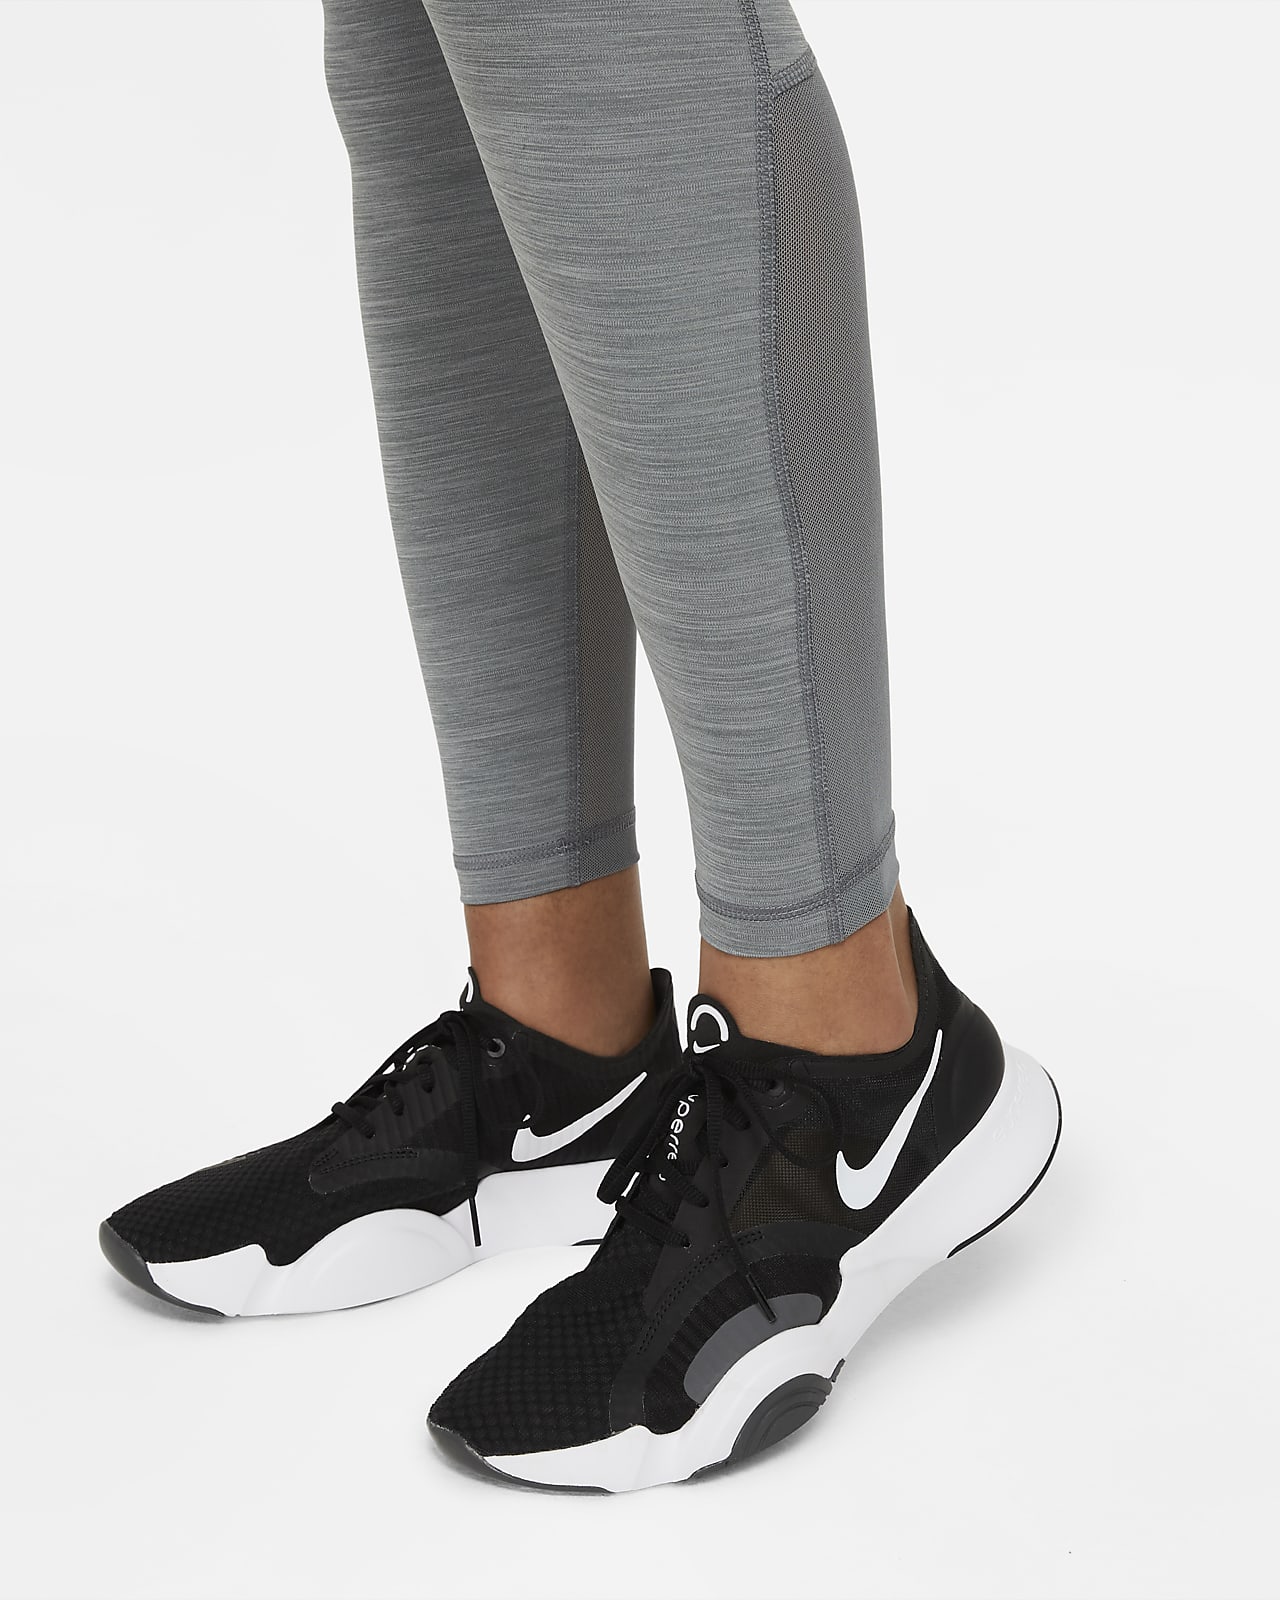 Nike, WOMAN, Legging Nike One, Size - Medium - Veli store